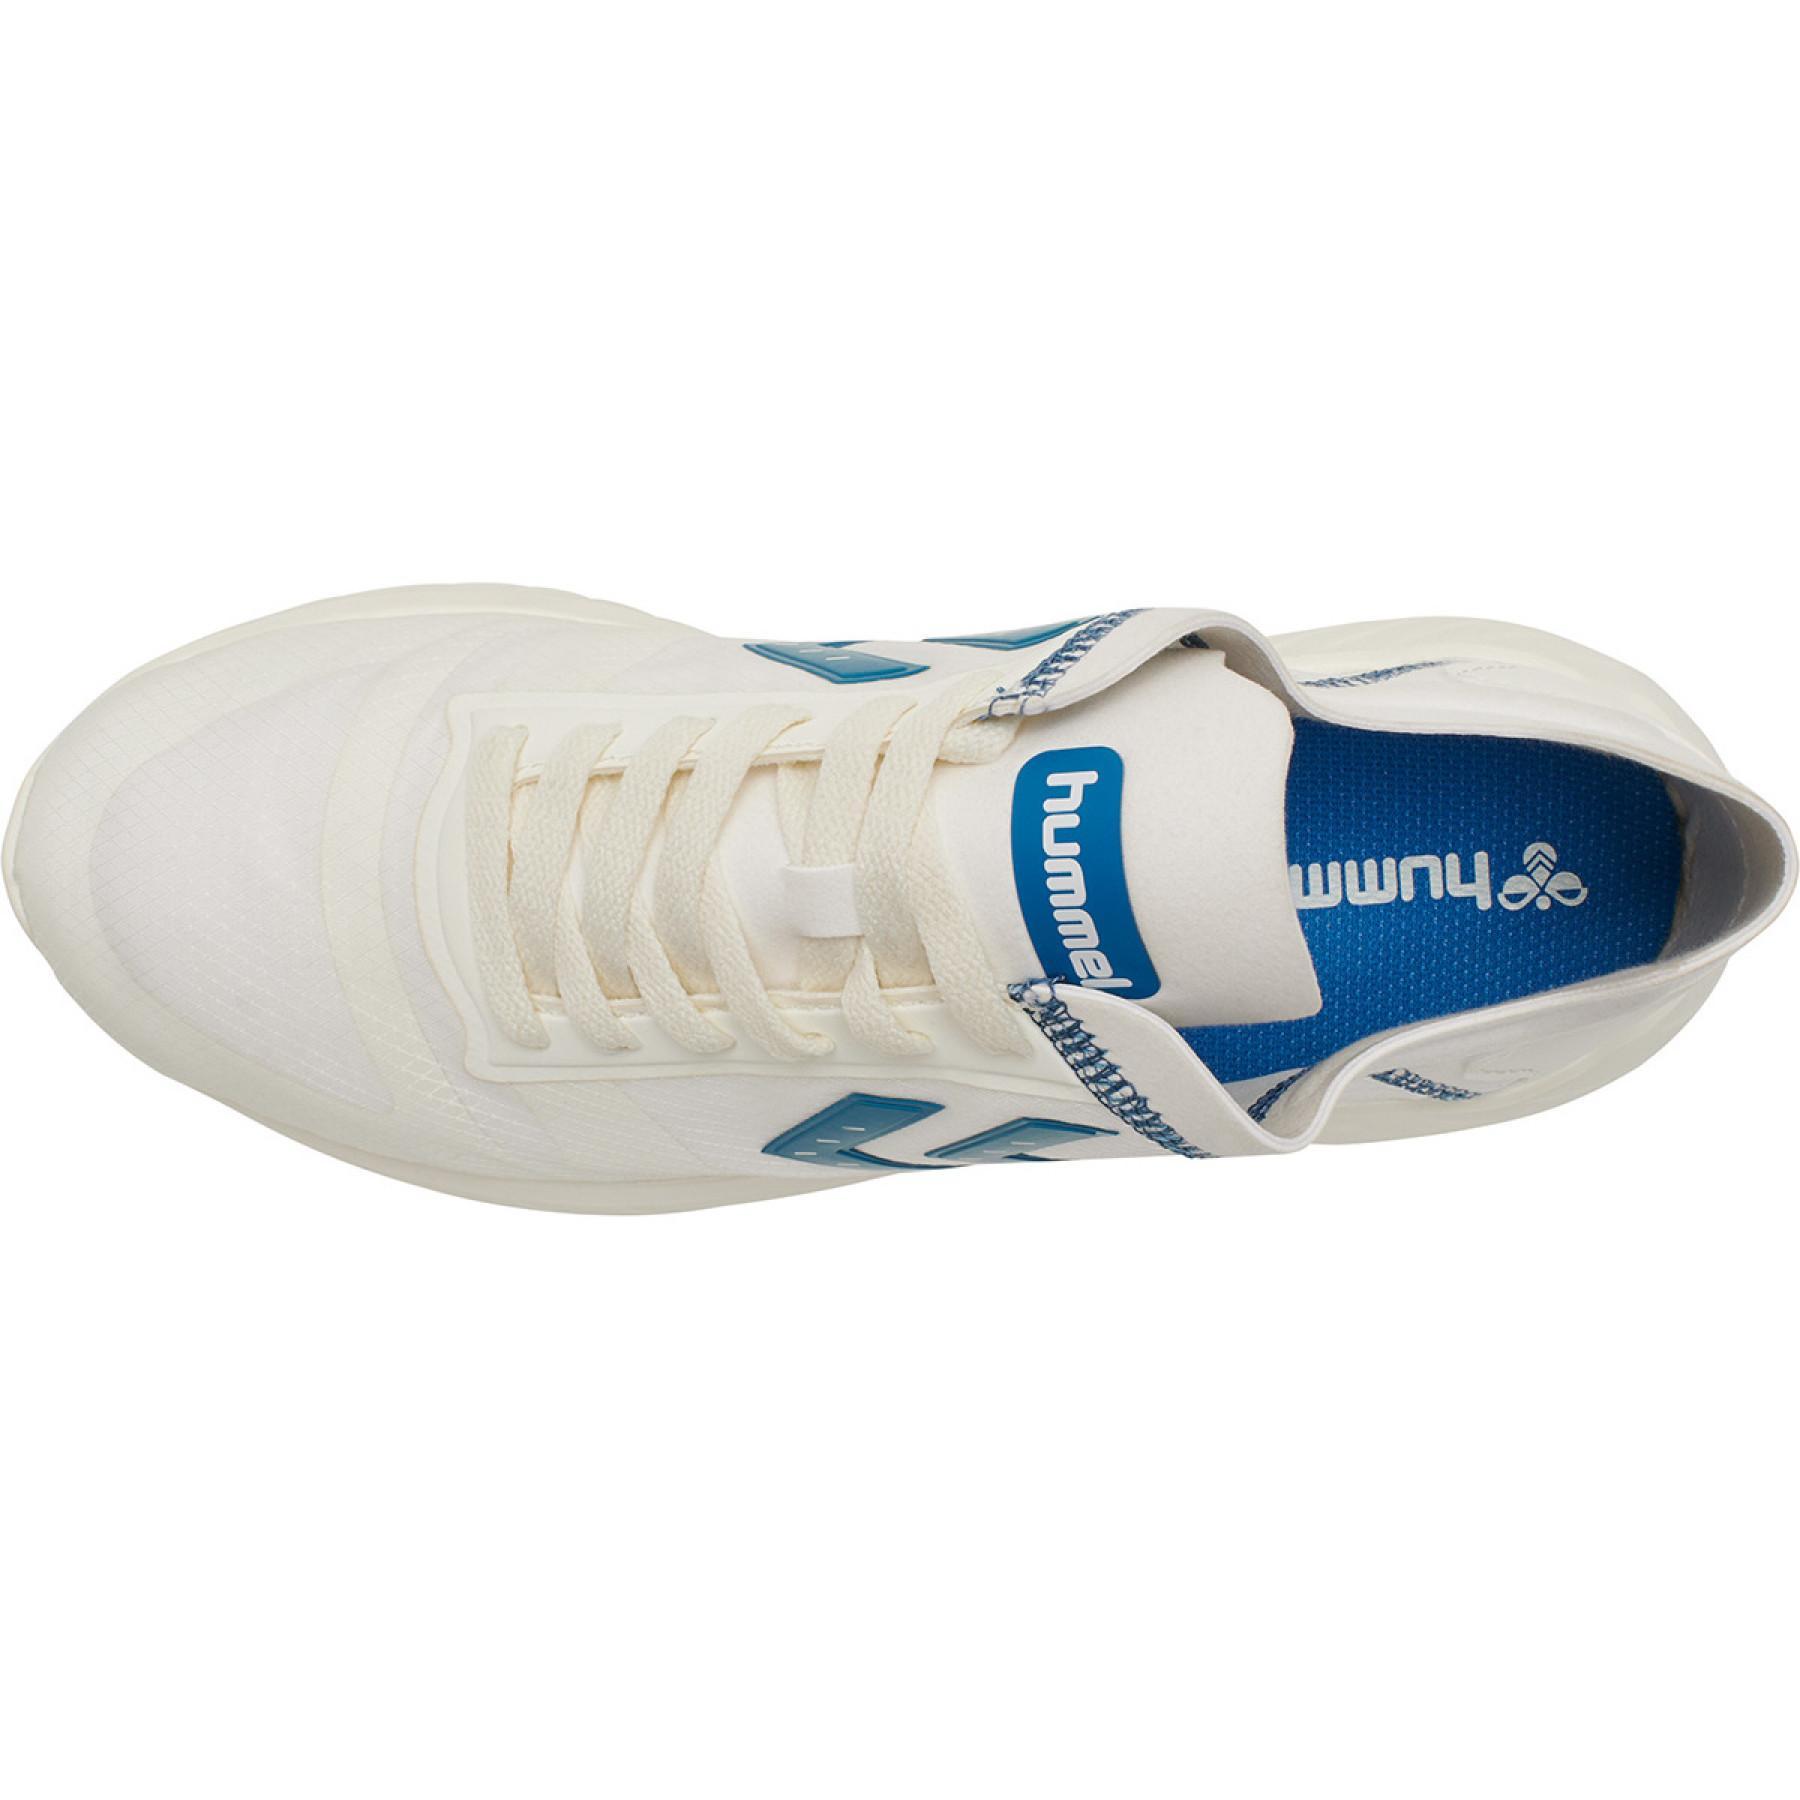 Details about   Hummel Minneapolis Legend Mens Casual Lace Up Trainers Sports Shoes 